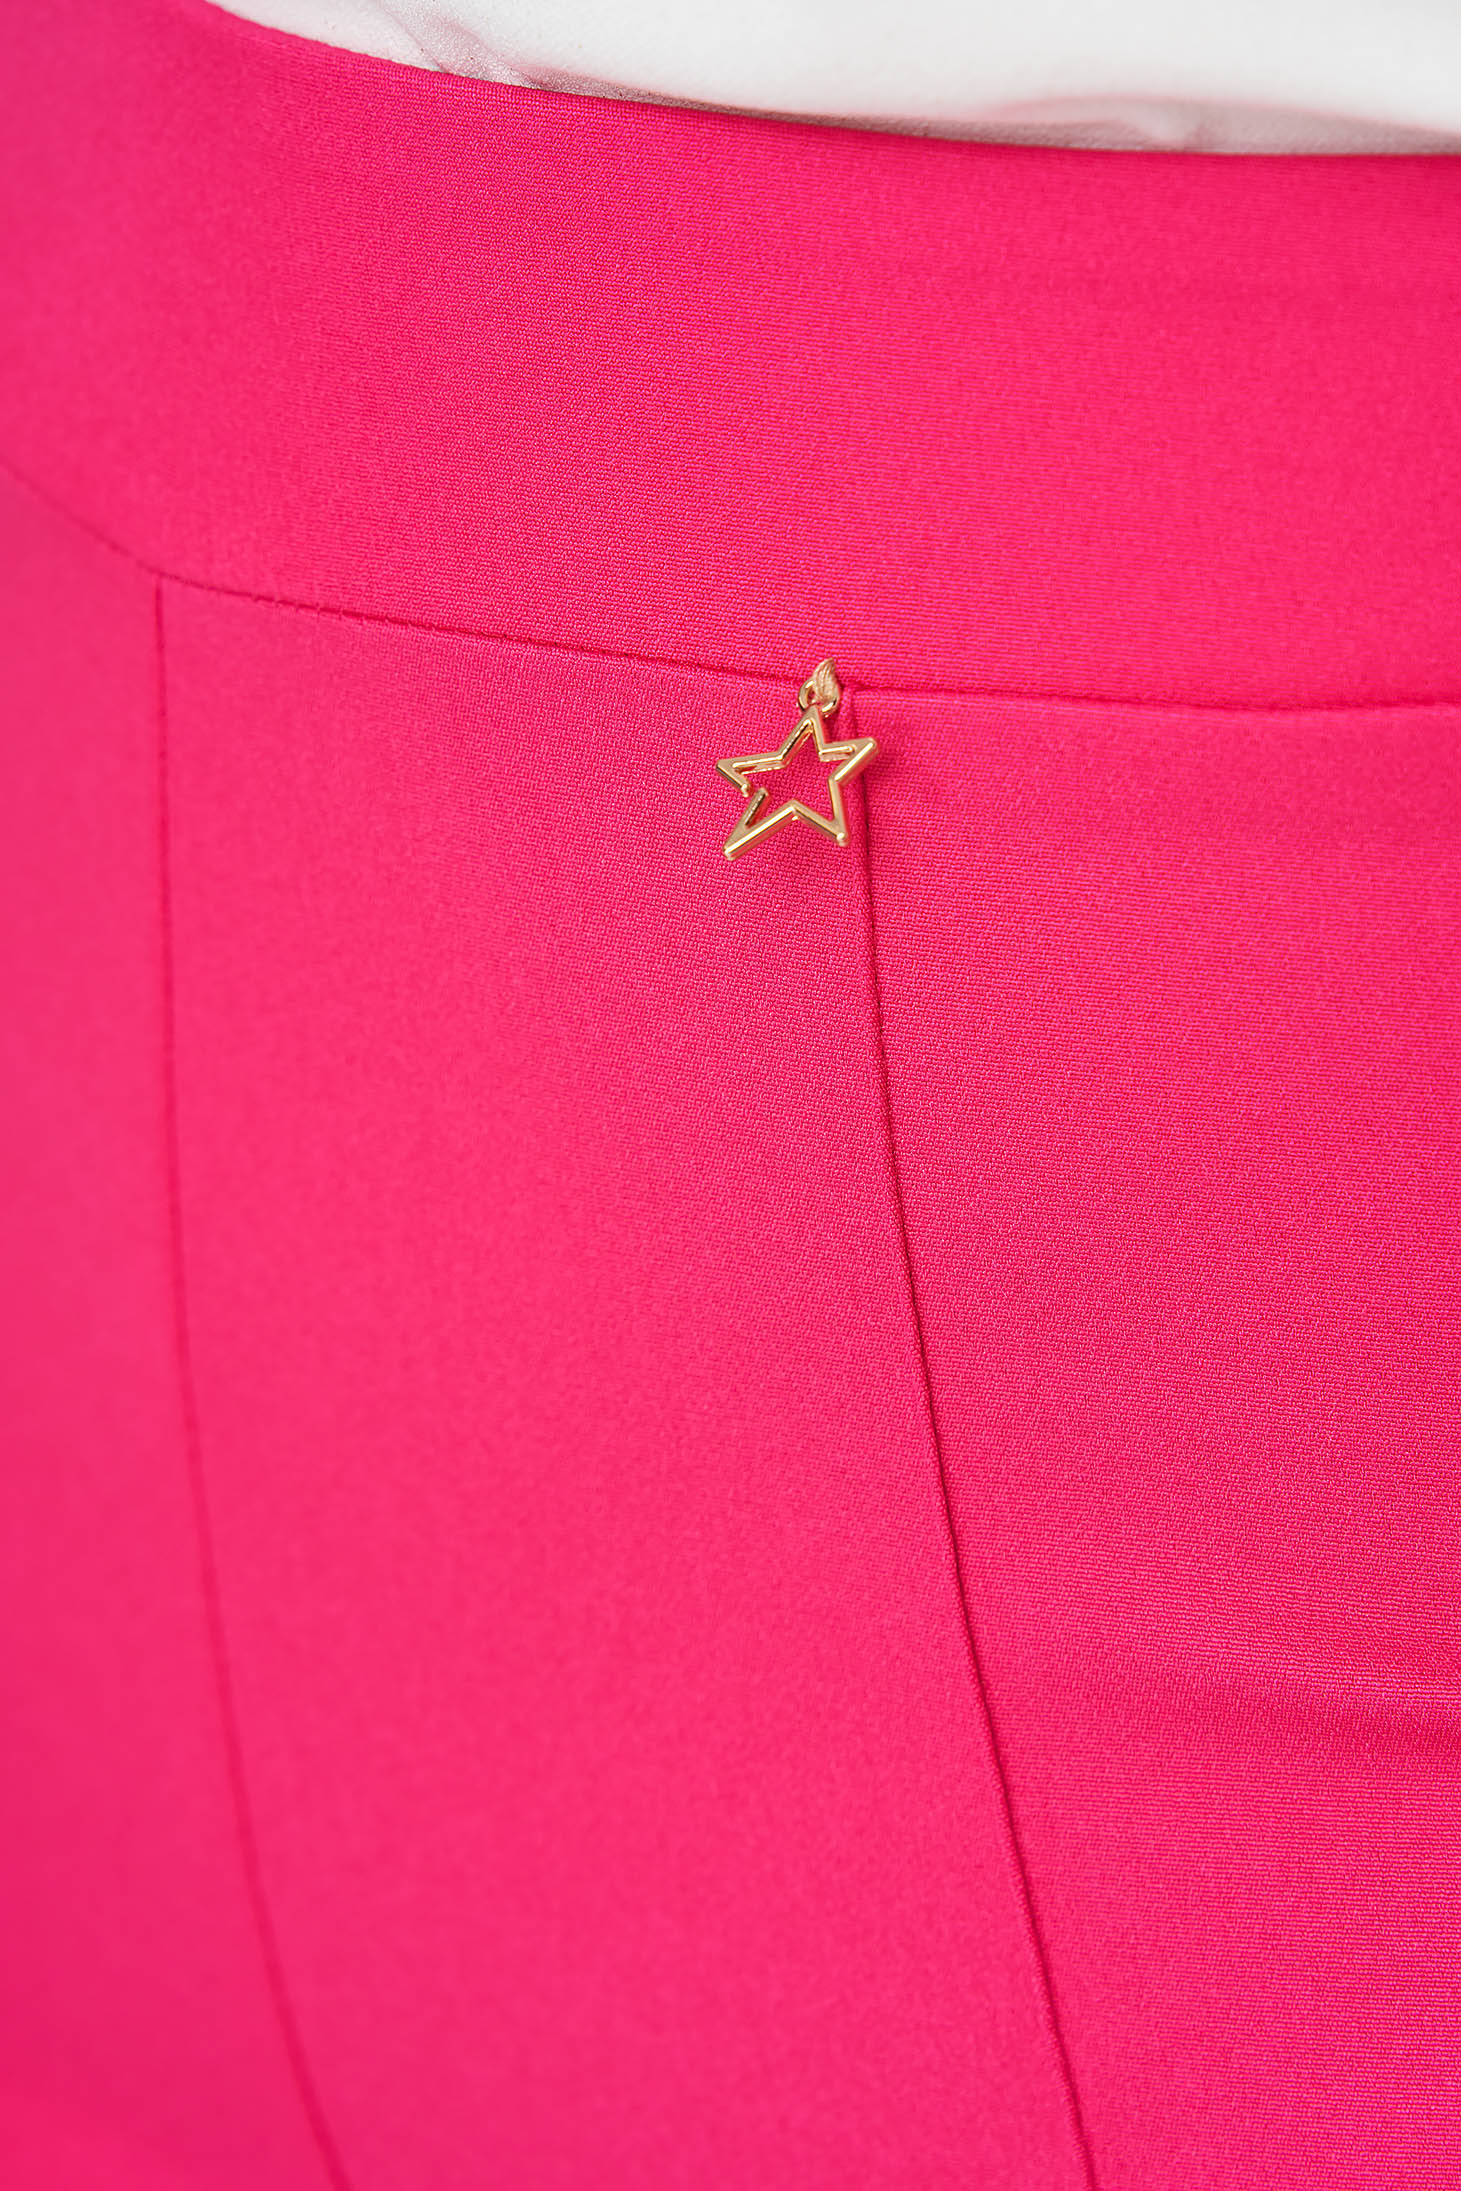 Pantaloni din stofa usor elastica fuchsia conici cu talie inalta - StarShinerS 6 - StarShinerS.ro